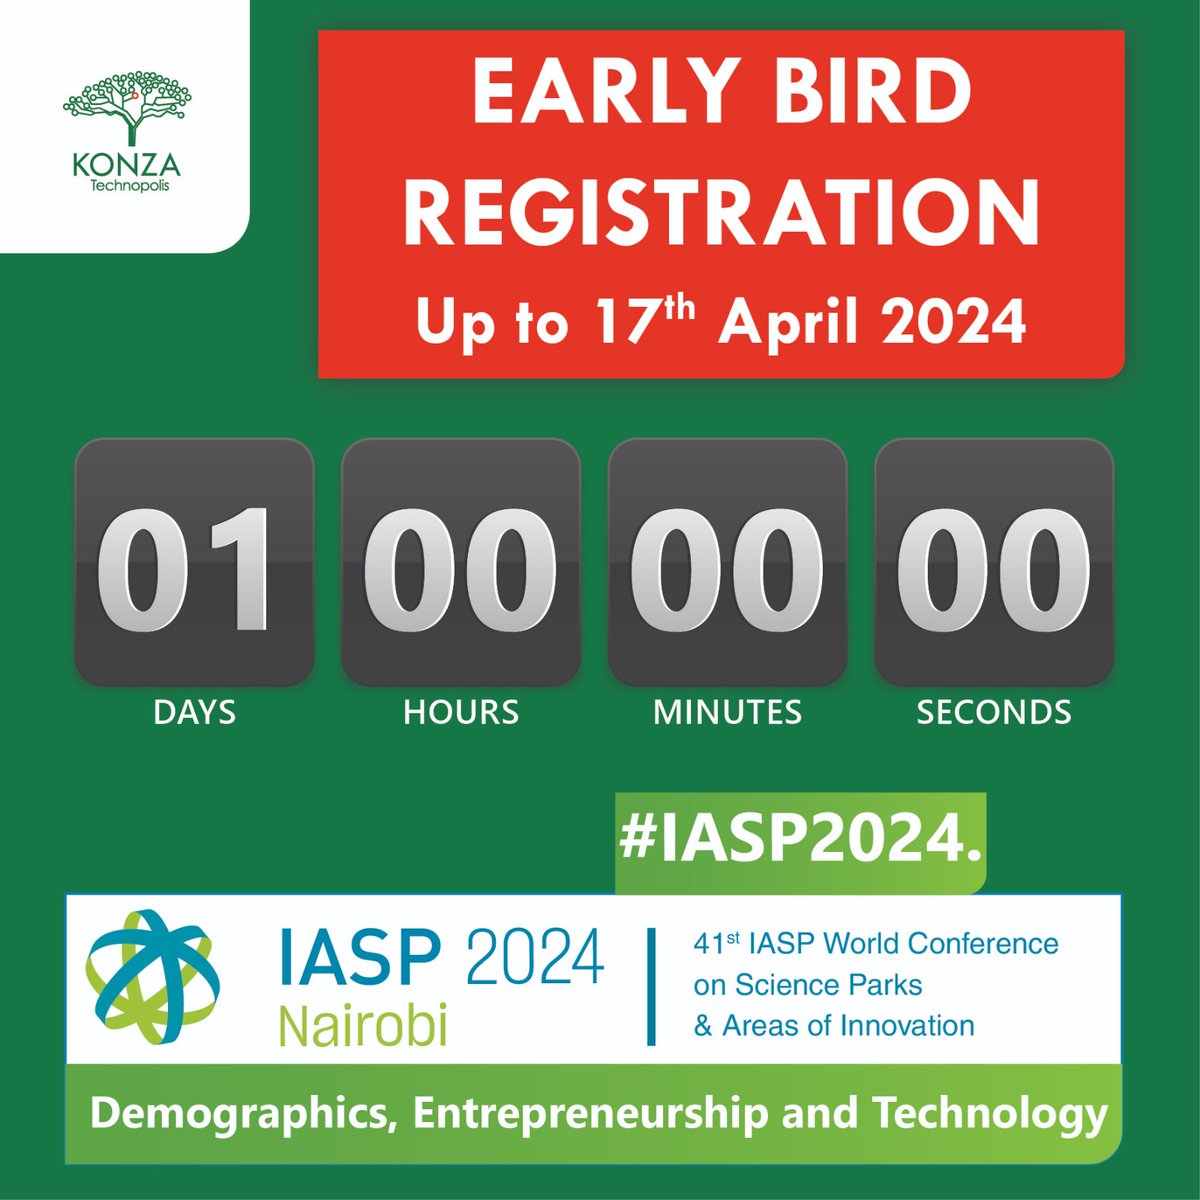 1 day to go. 

 #IASP2024 conference 

Register here
 iaspworldconference.com

#LetsGoToKenya
#KonzaTechnopolis
#SmartCity
#SiliconSavannah